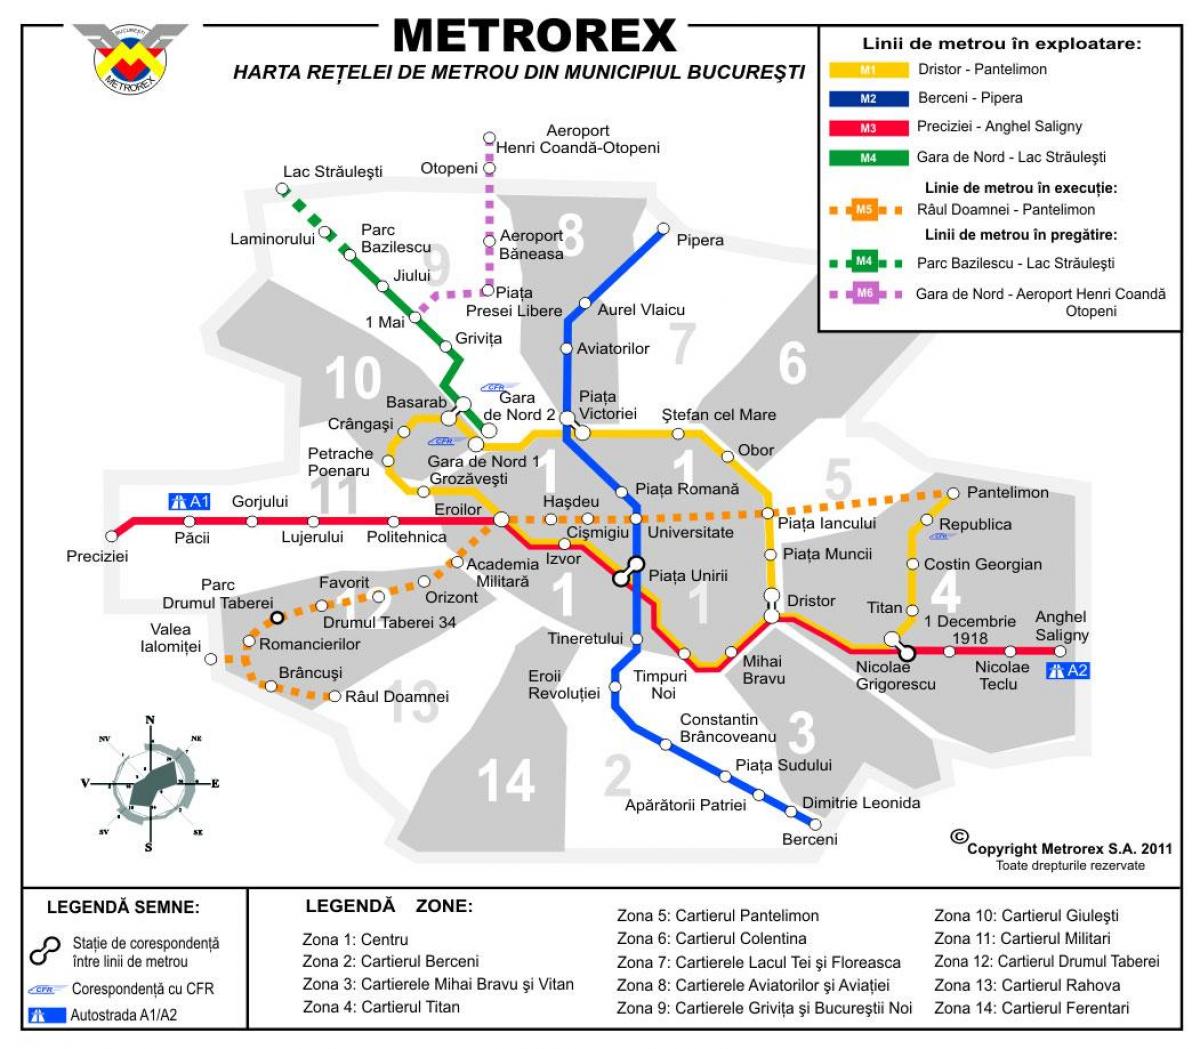 Peta dari metrorex 